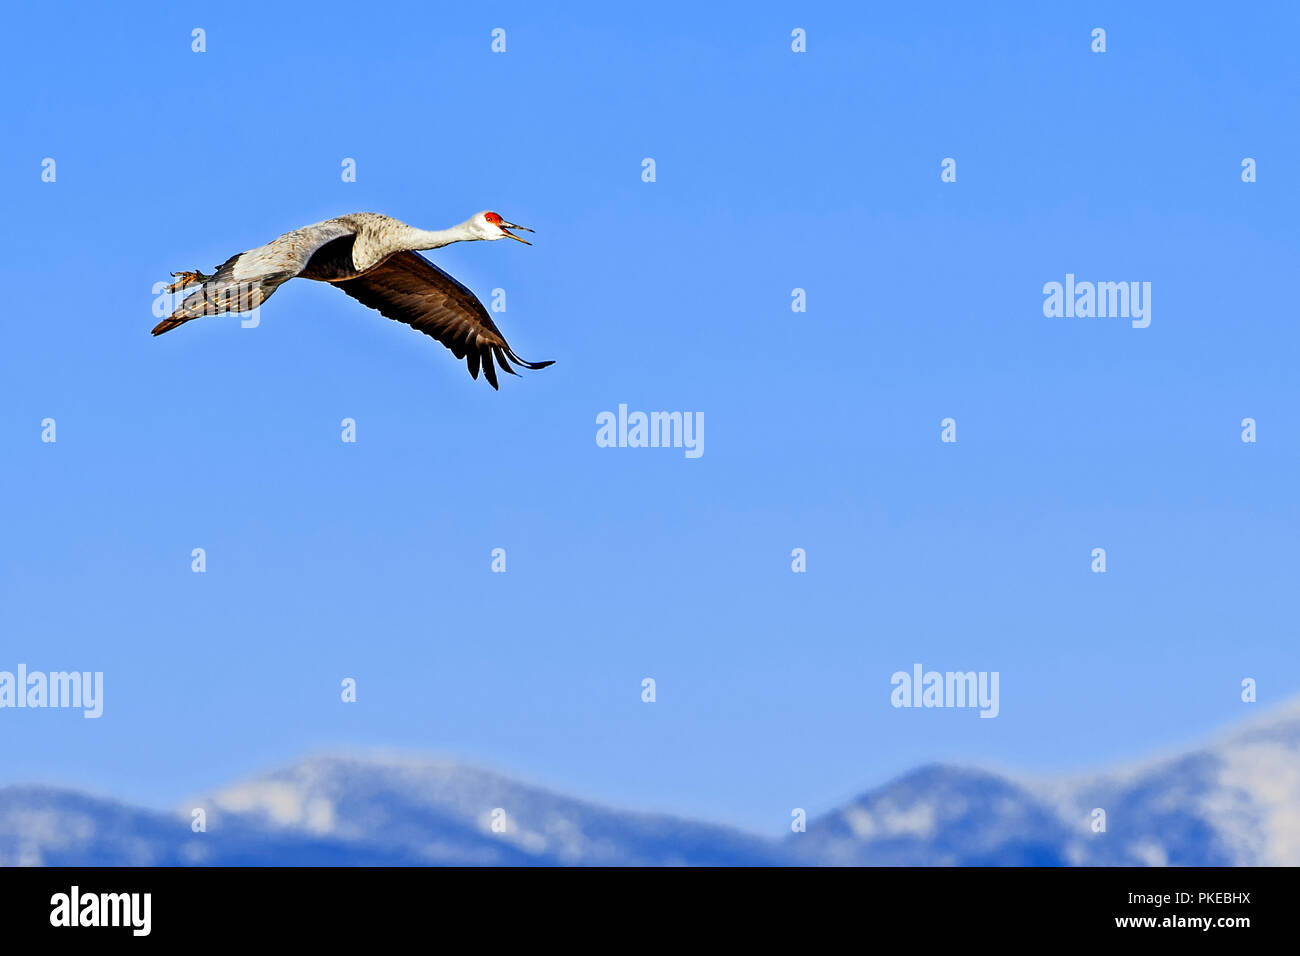 Sandhill crane (Antigone canadensis) in flight in a blue sky, Bosque Del Apache Wildlife Refuge; New Mexico, United States of America Stock Photo